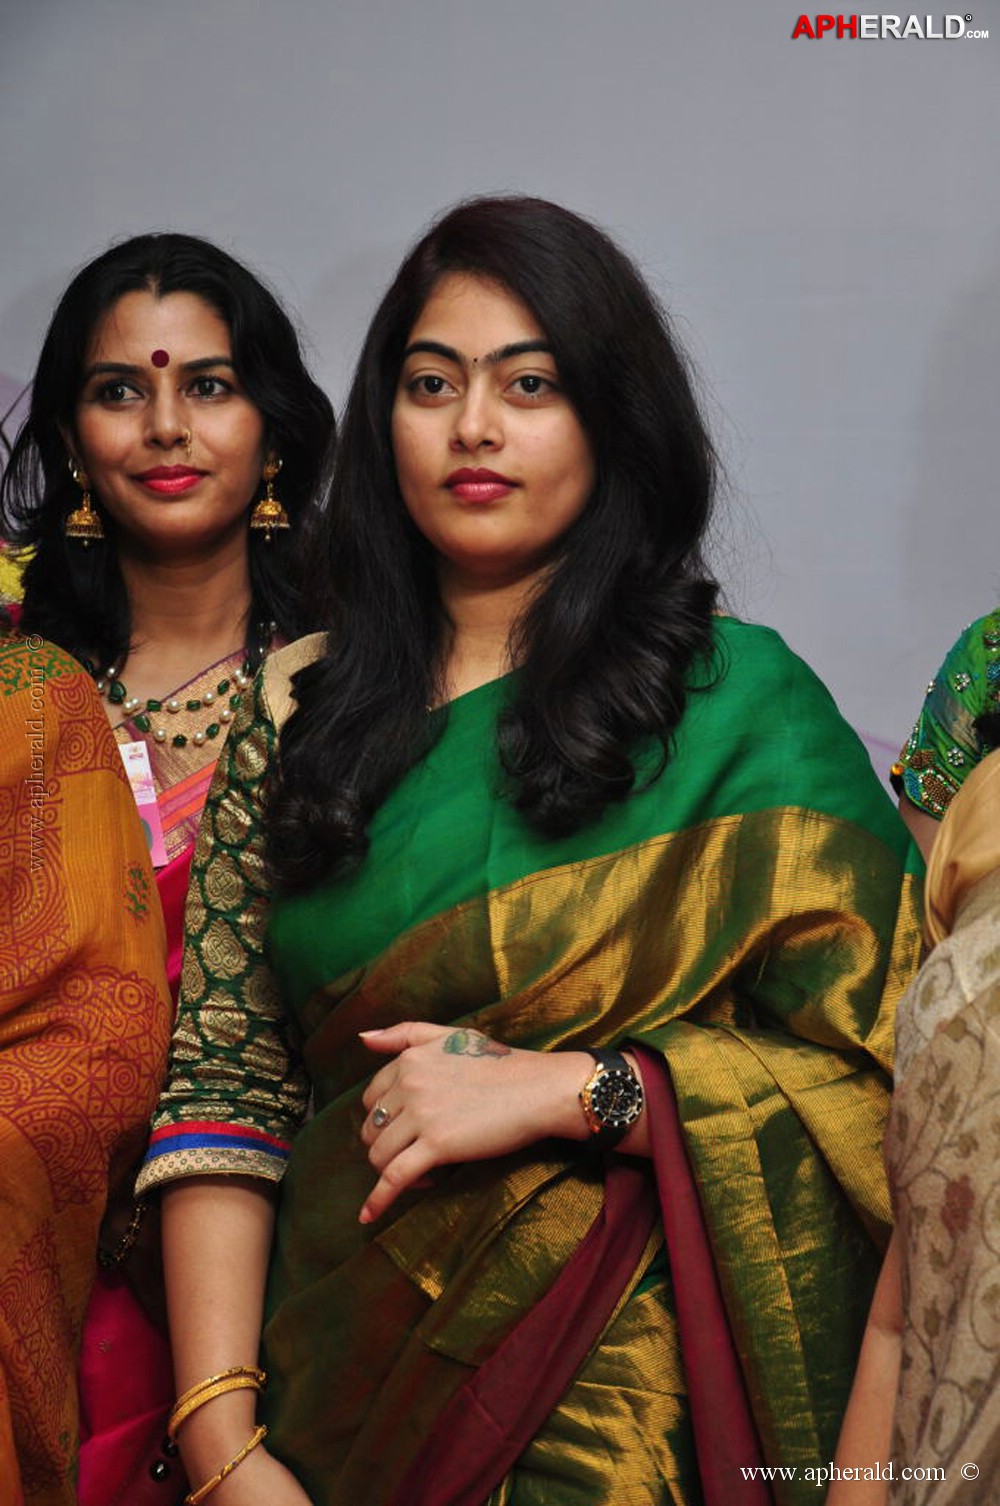 Srimathi Silk Mark Beauty Contest 2013